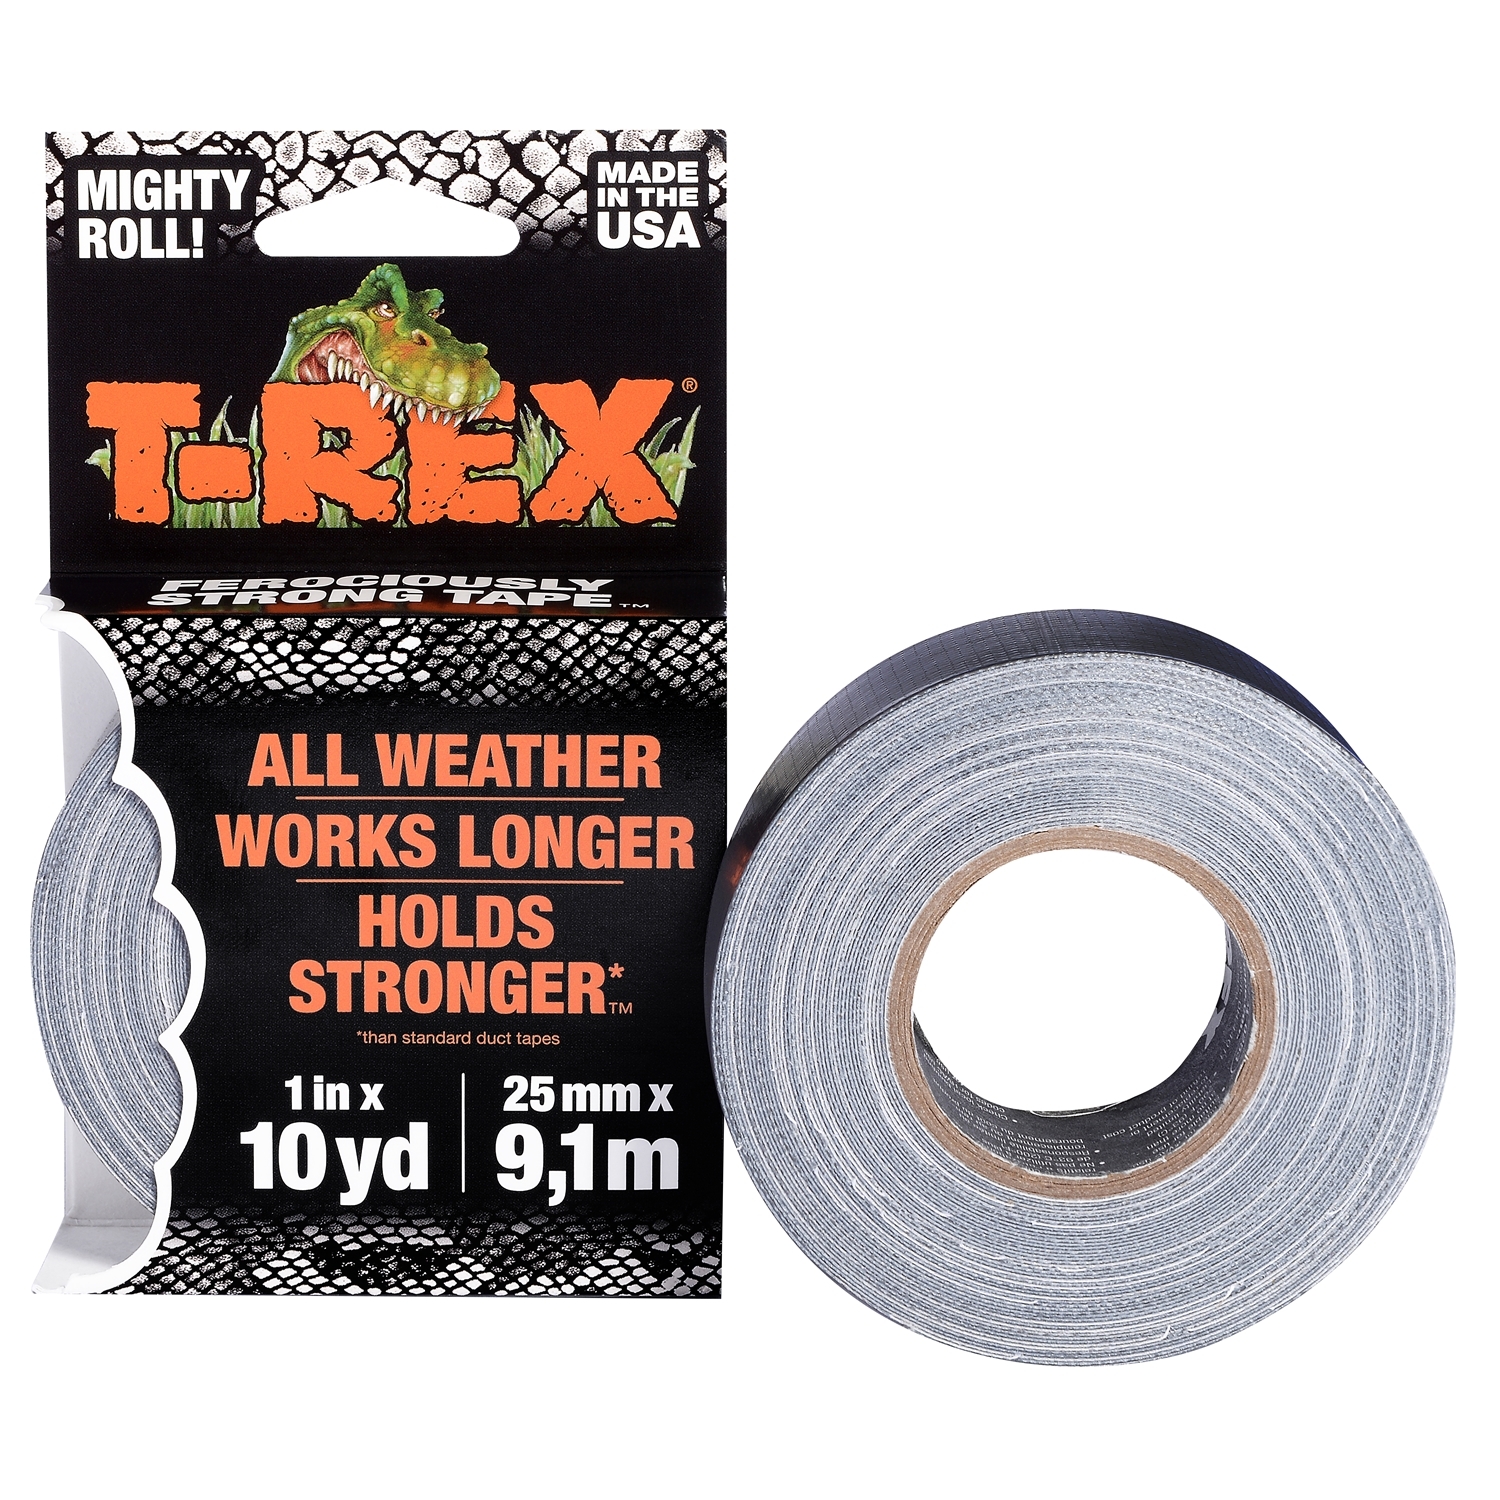 T Rex 25mm x 9.1m Black Tape Image 2